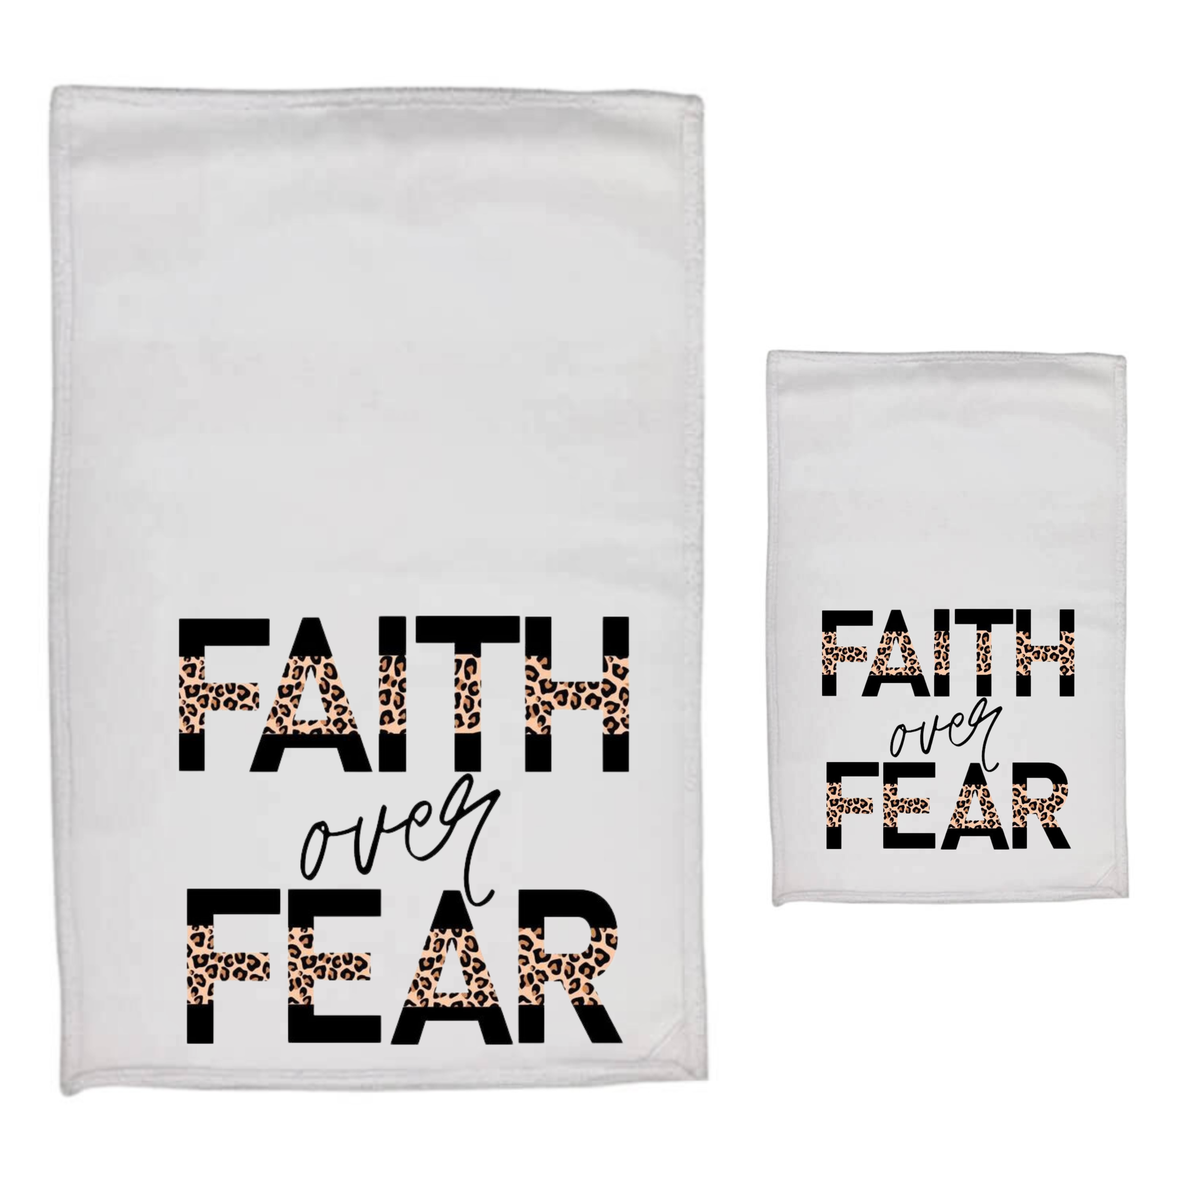 Faith over fear - White Polyester Hand & Face Towel